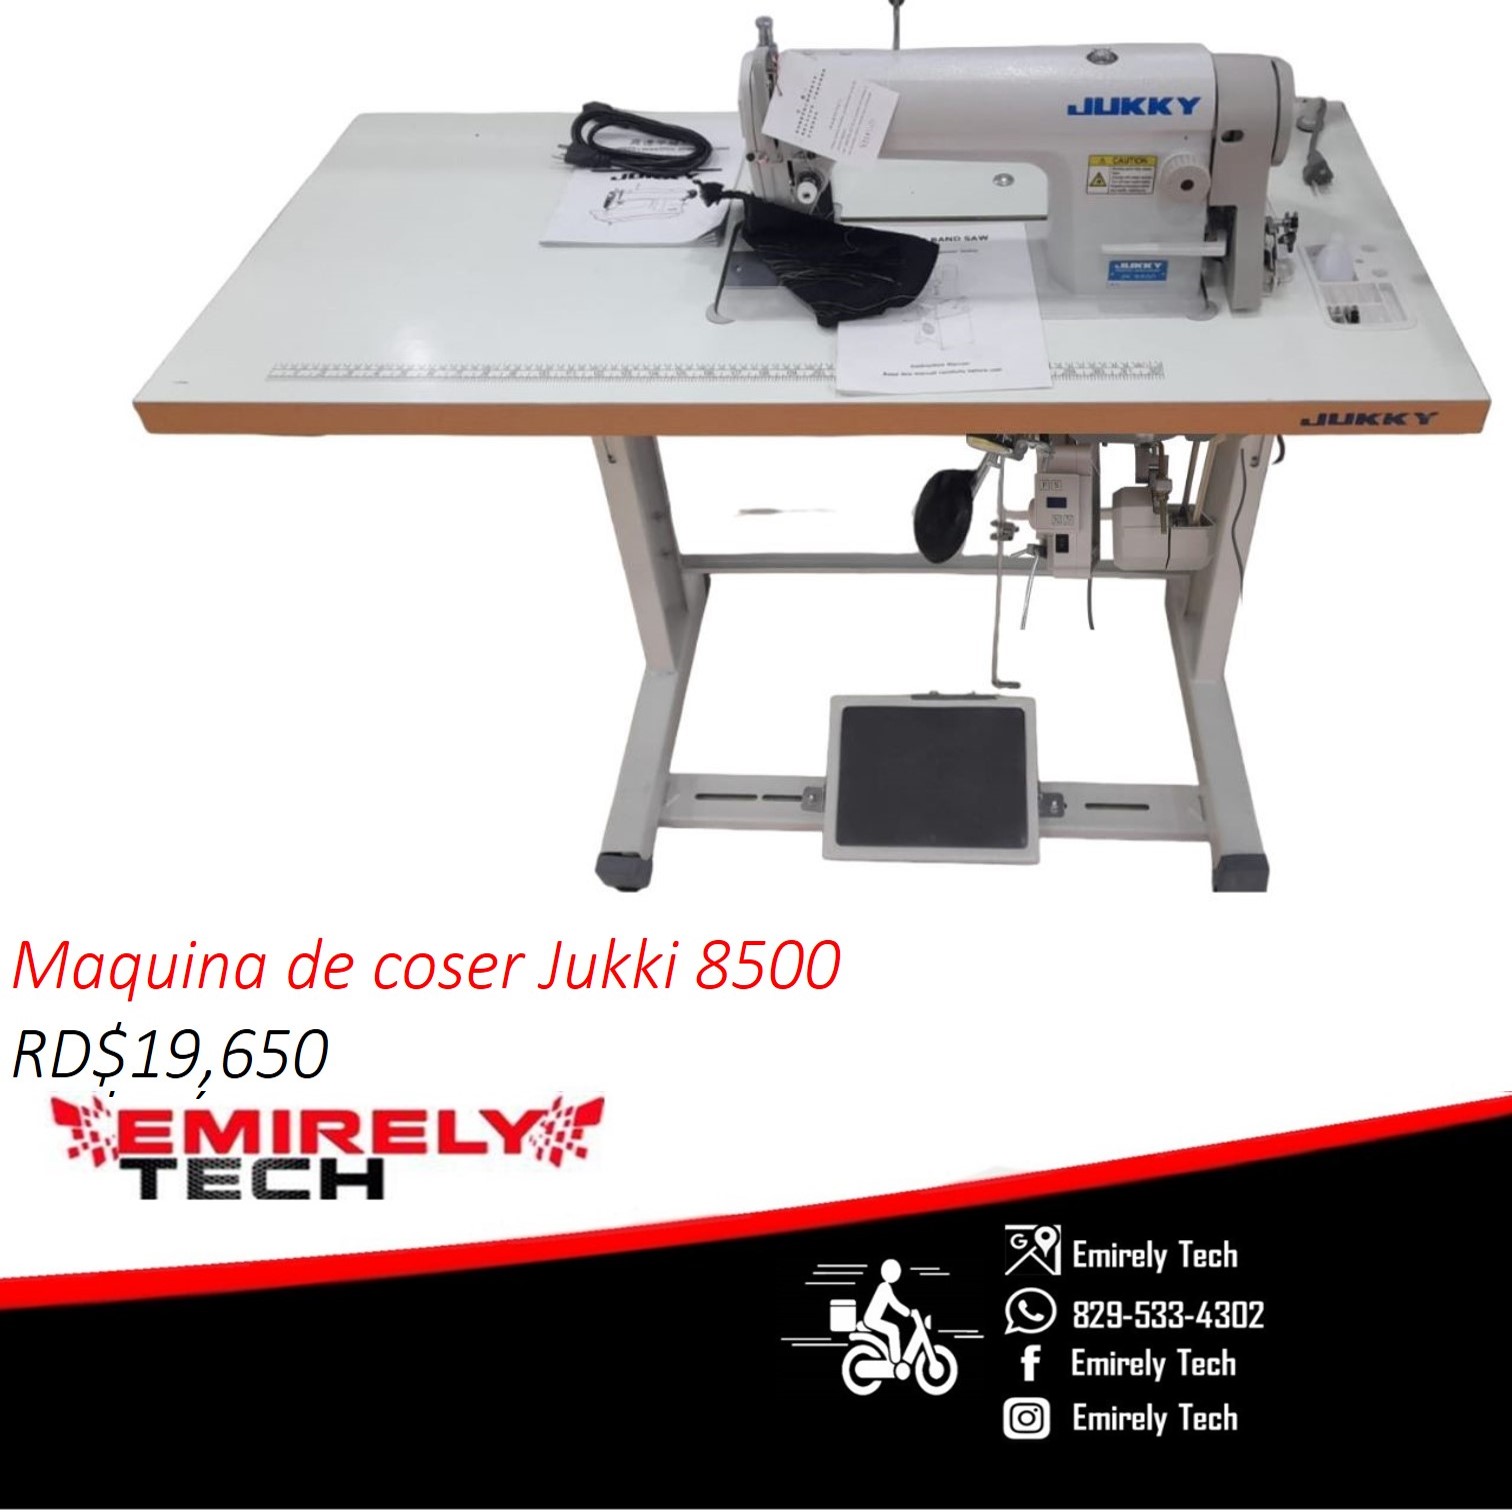 Maquina de coser Electrica multifuncional profesional JUKKY  Foto 7158313-n1.jpg